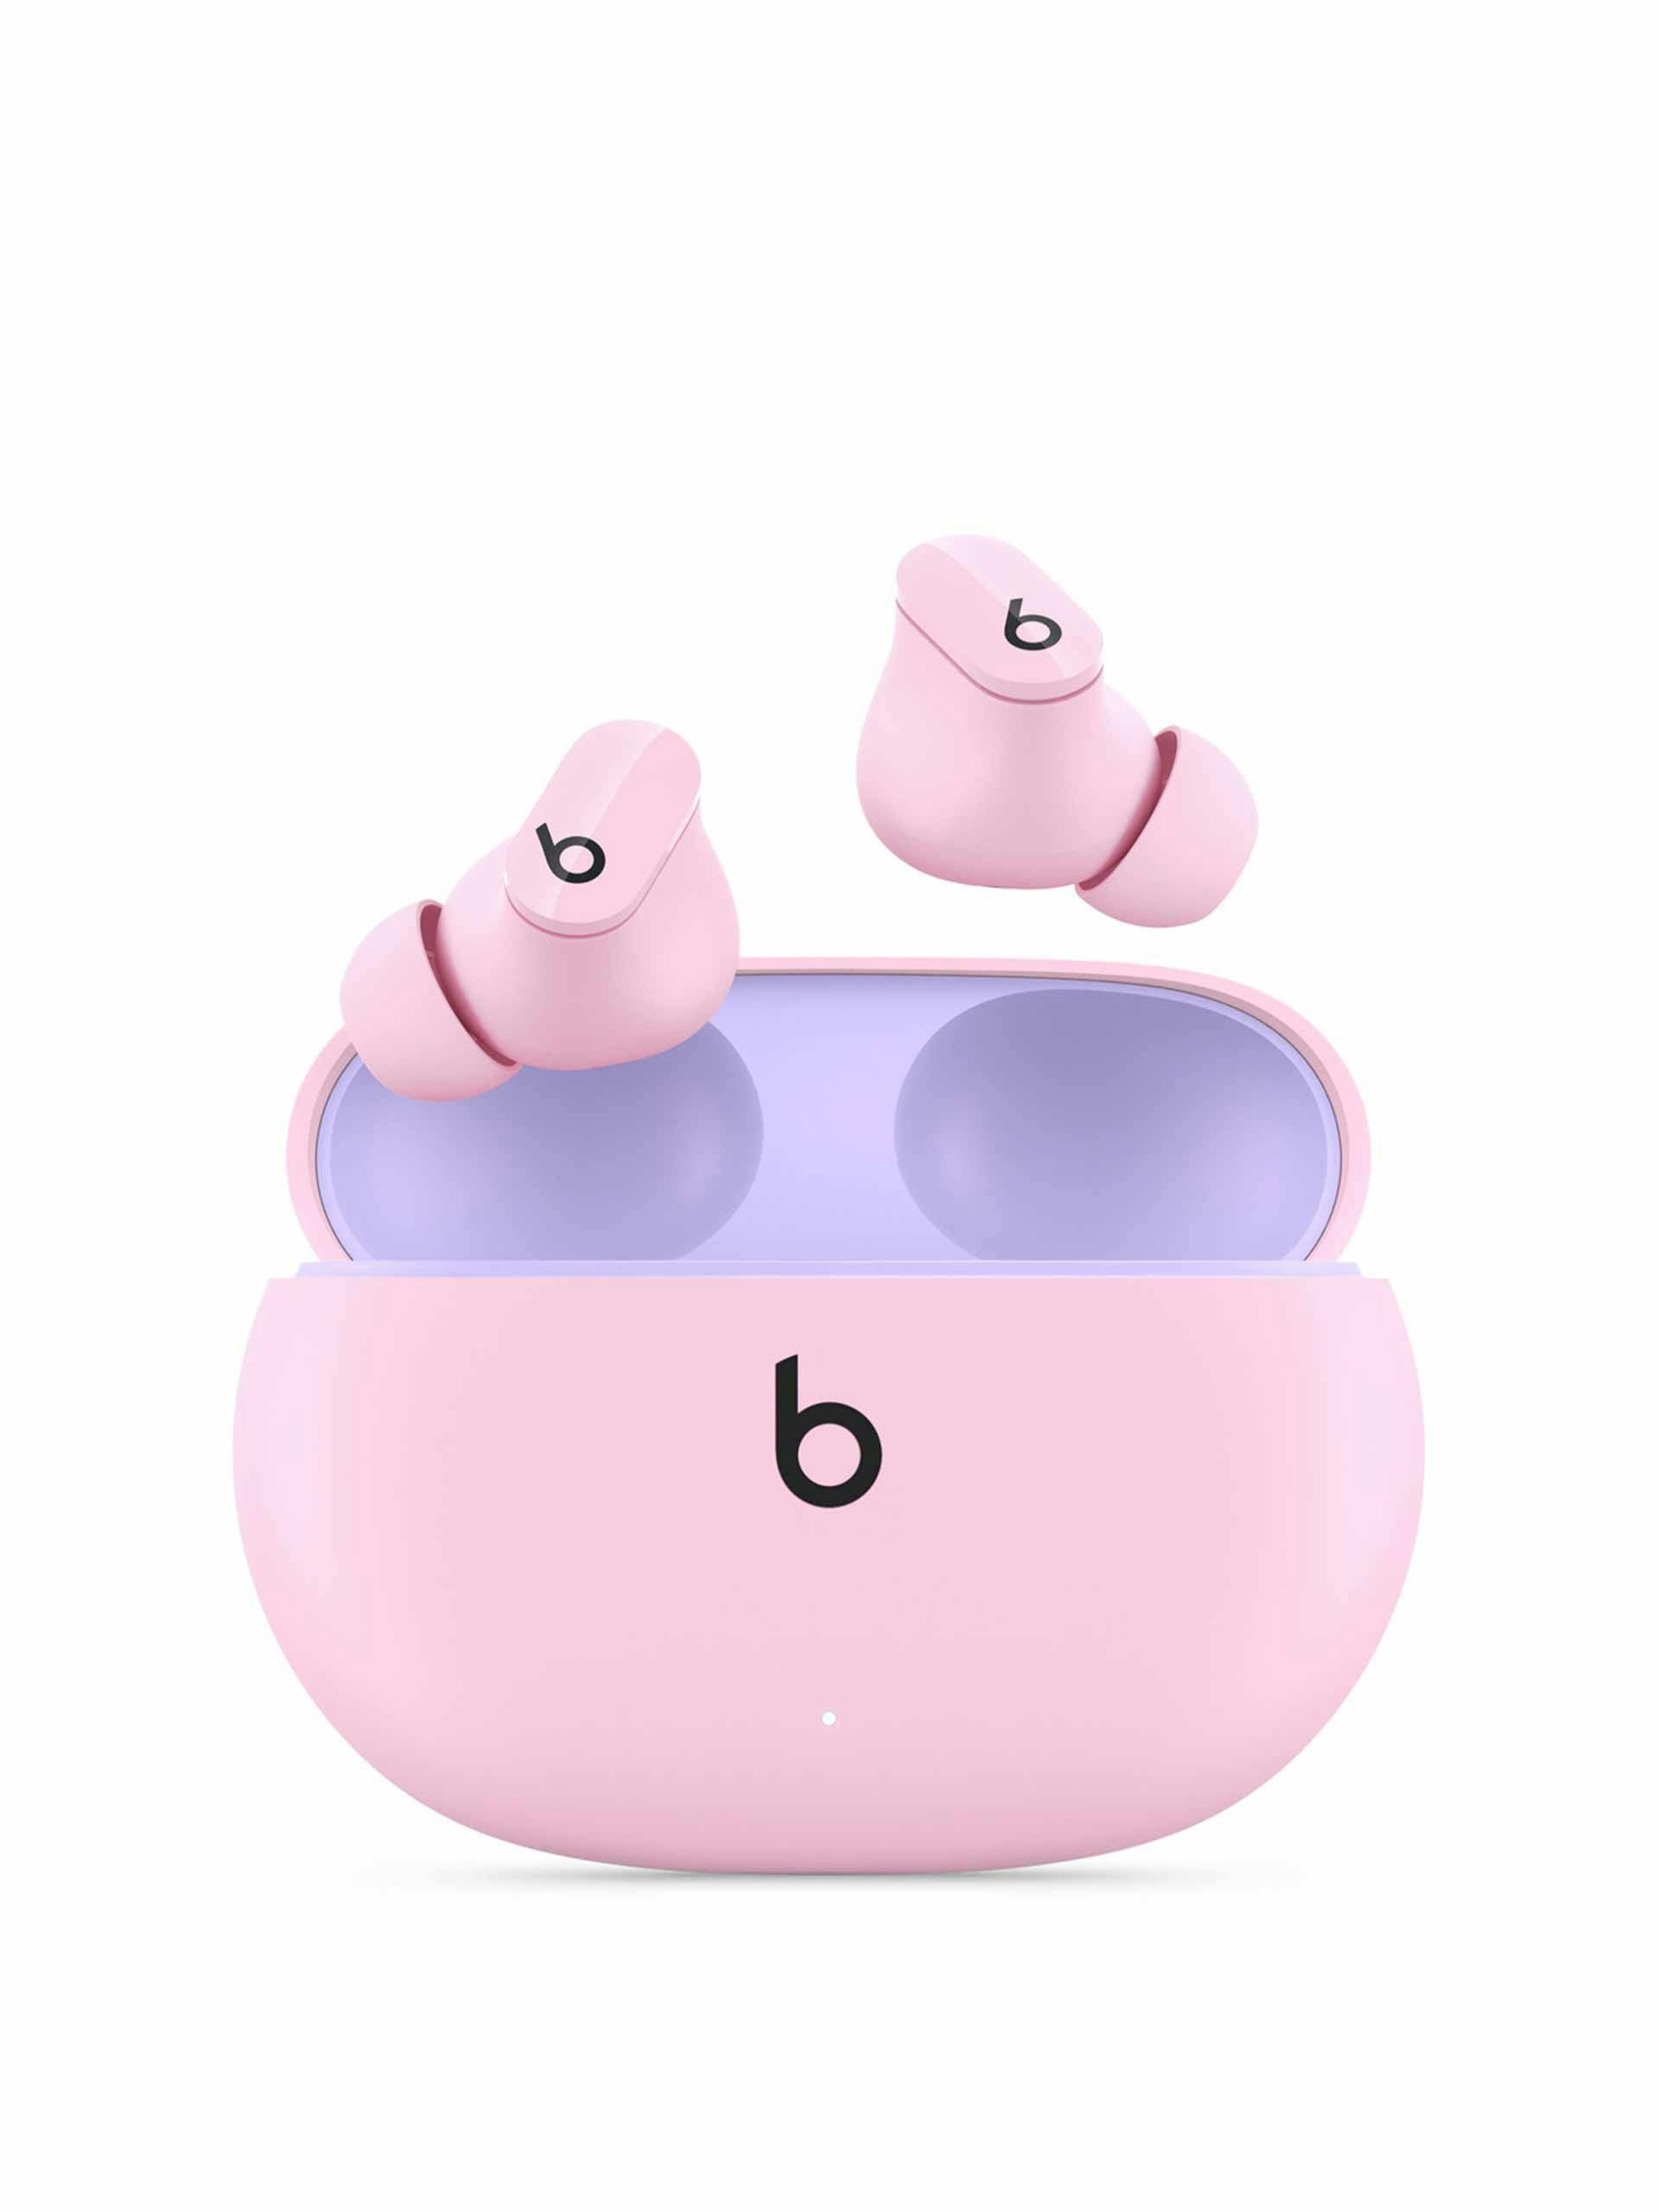 Pink noise-cancelling wireless earphones